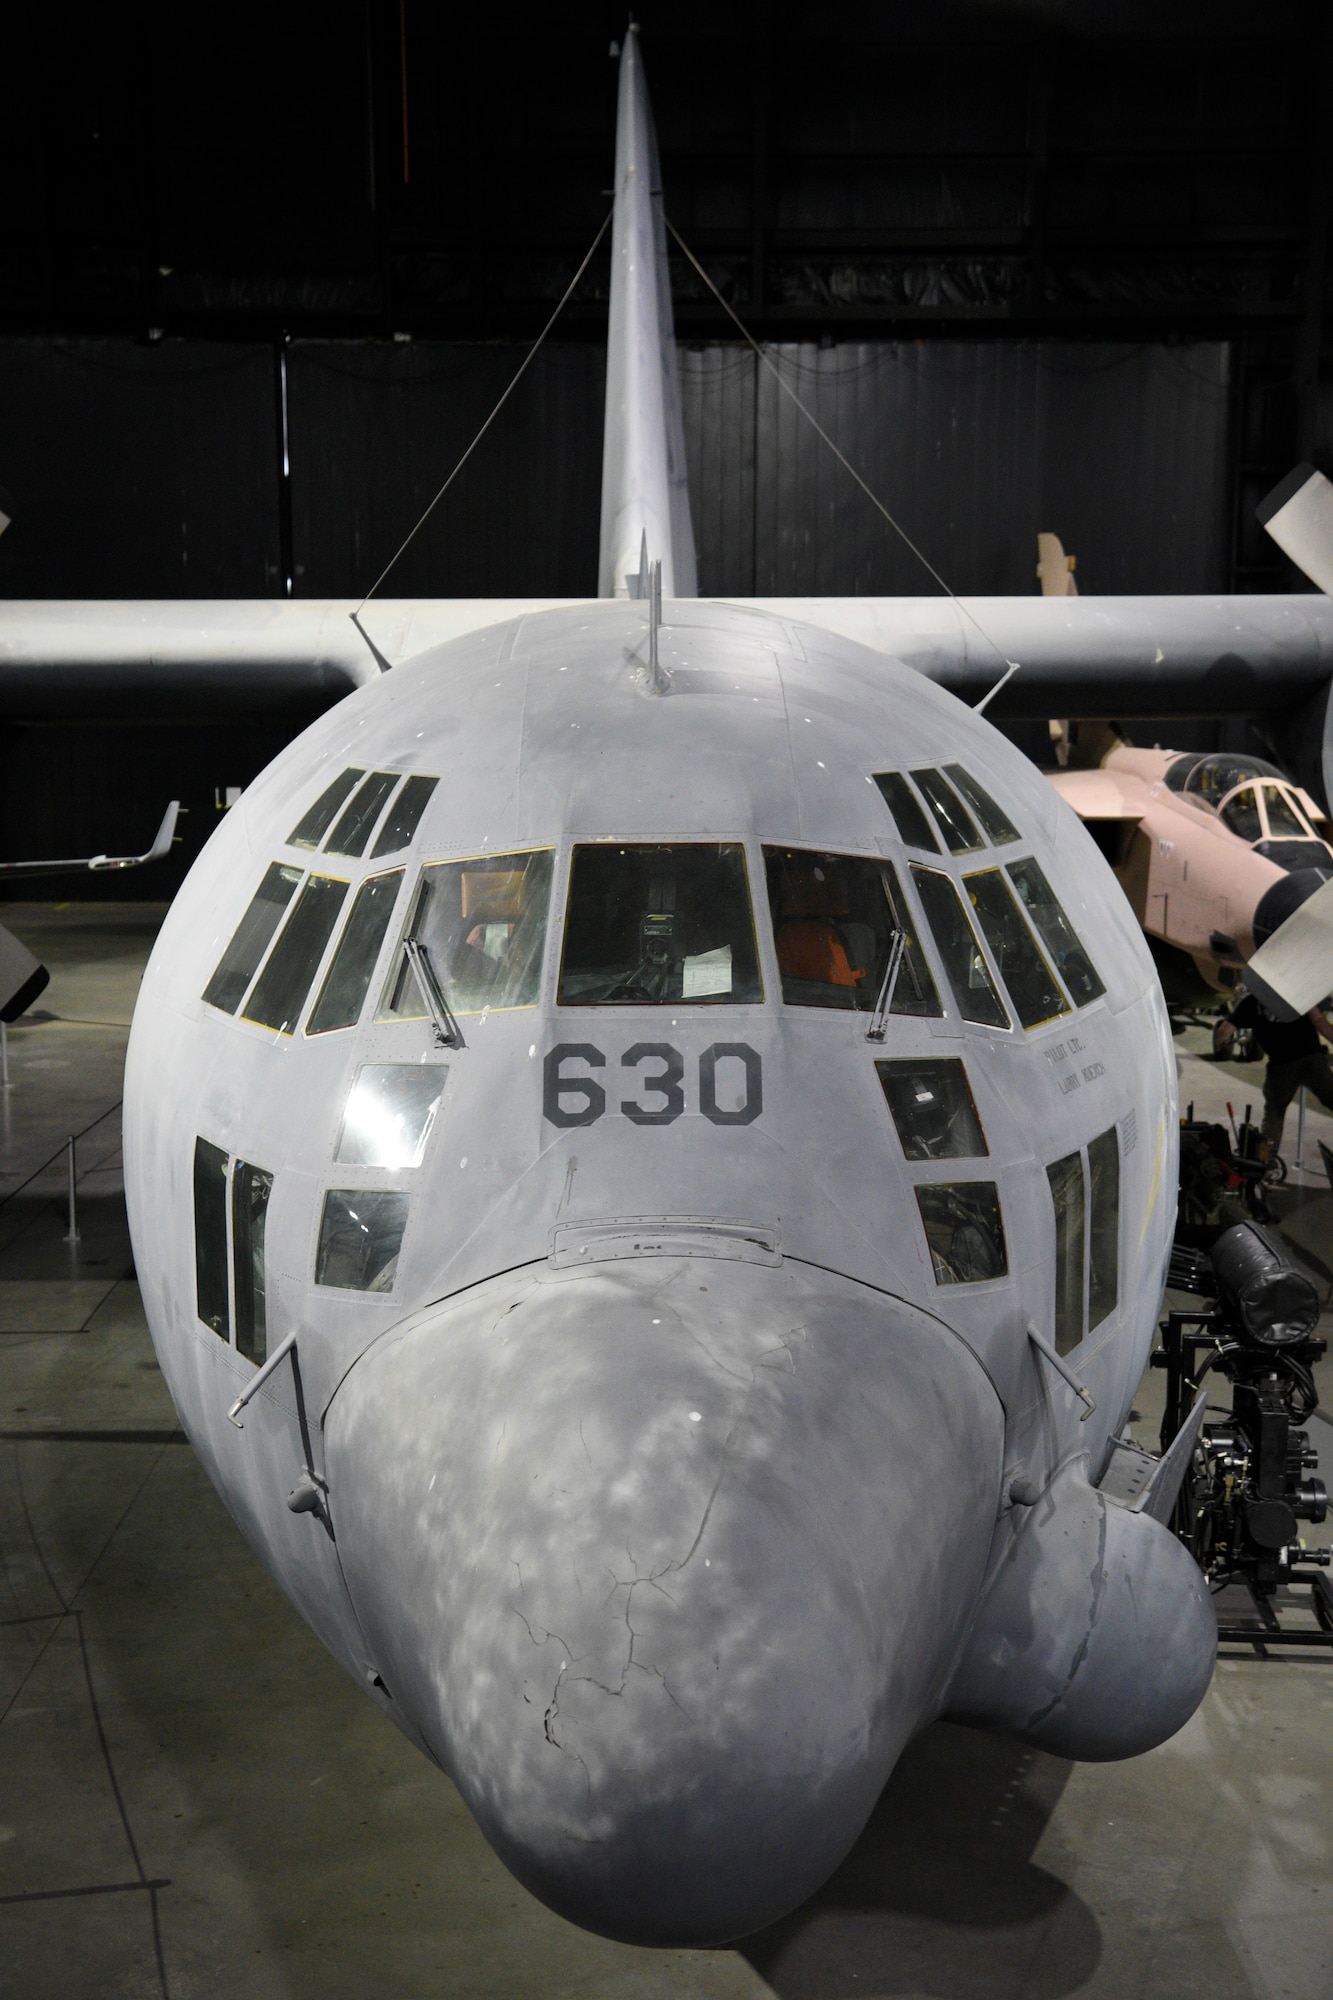 Lockheed AC-130A Spectre